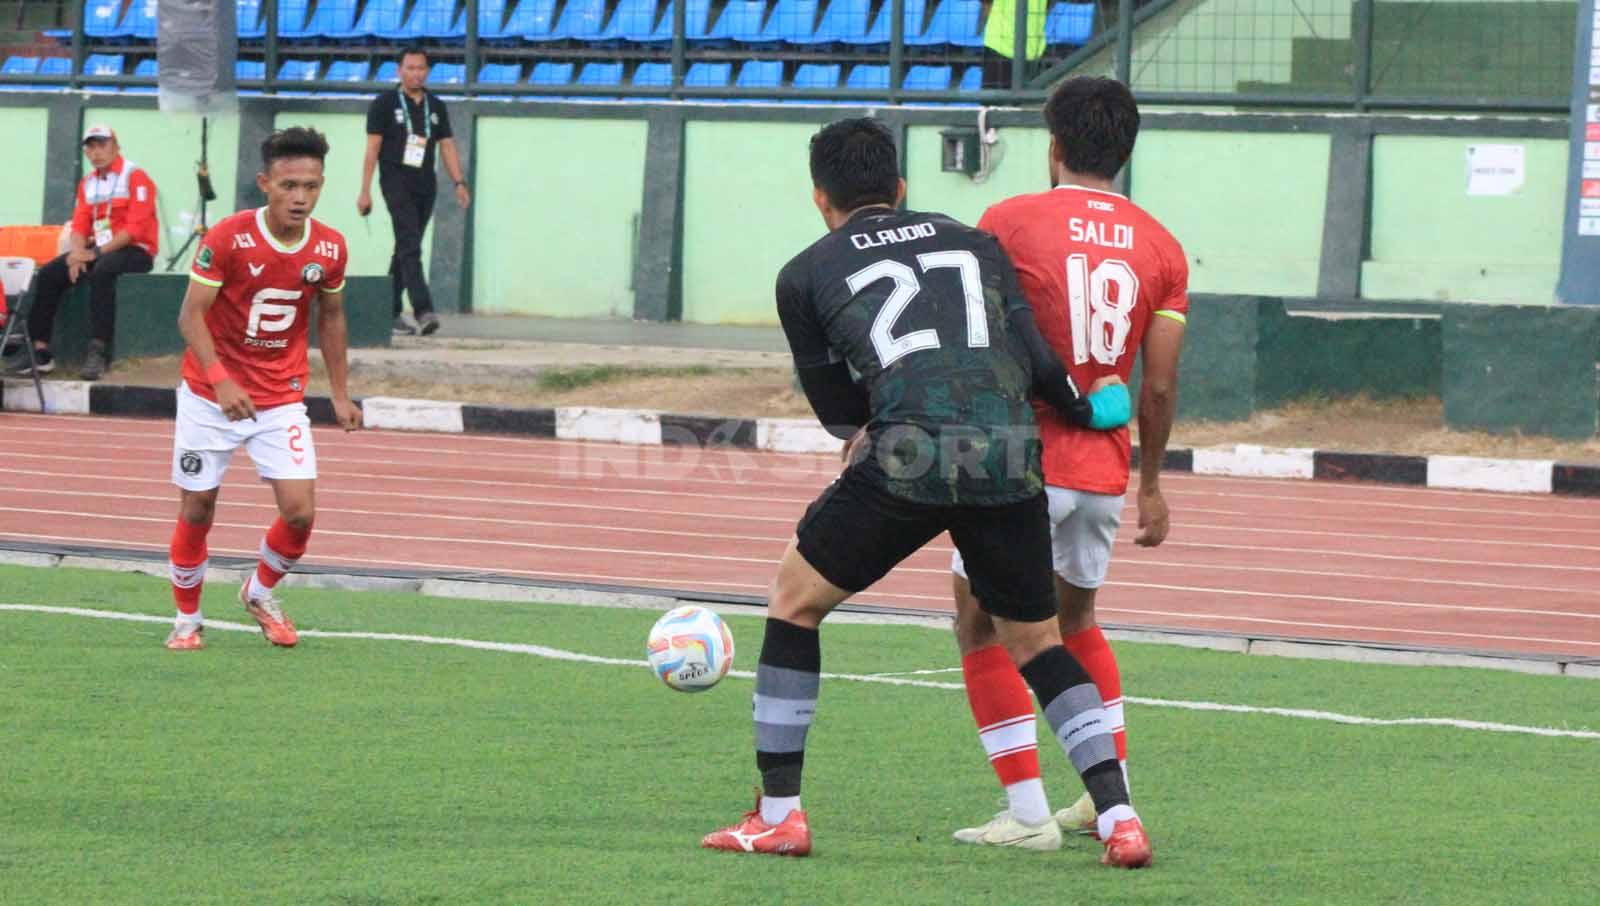 Pemain PSKC Cimahi, Claudio, mengawal ketat pemain FC Bekasi City, Saldi. Foto: Arif Rahman/INDOSPORT.